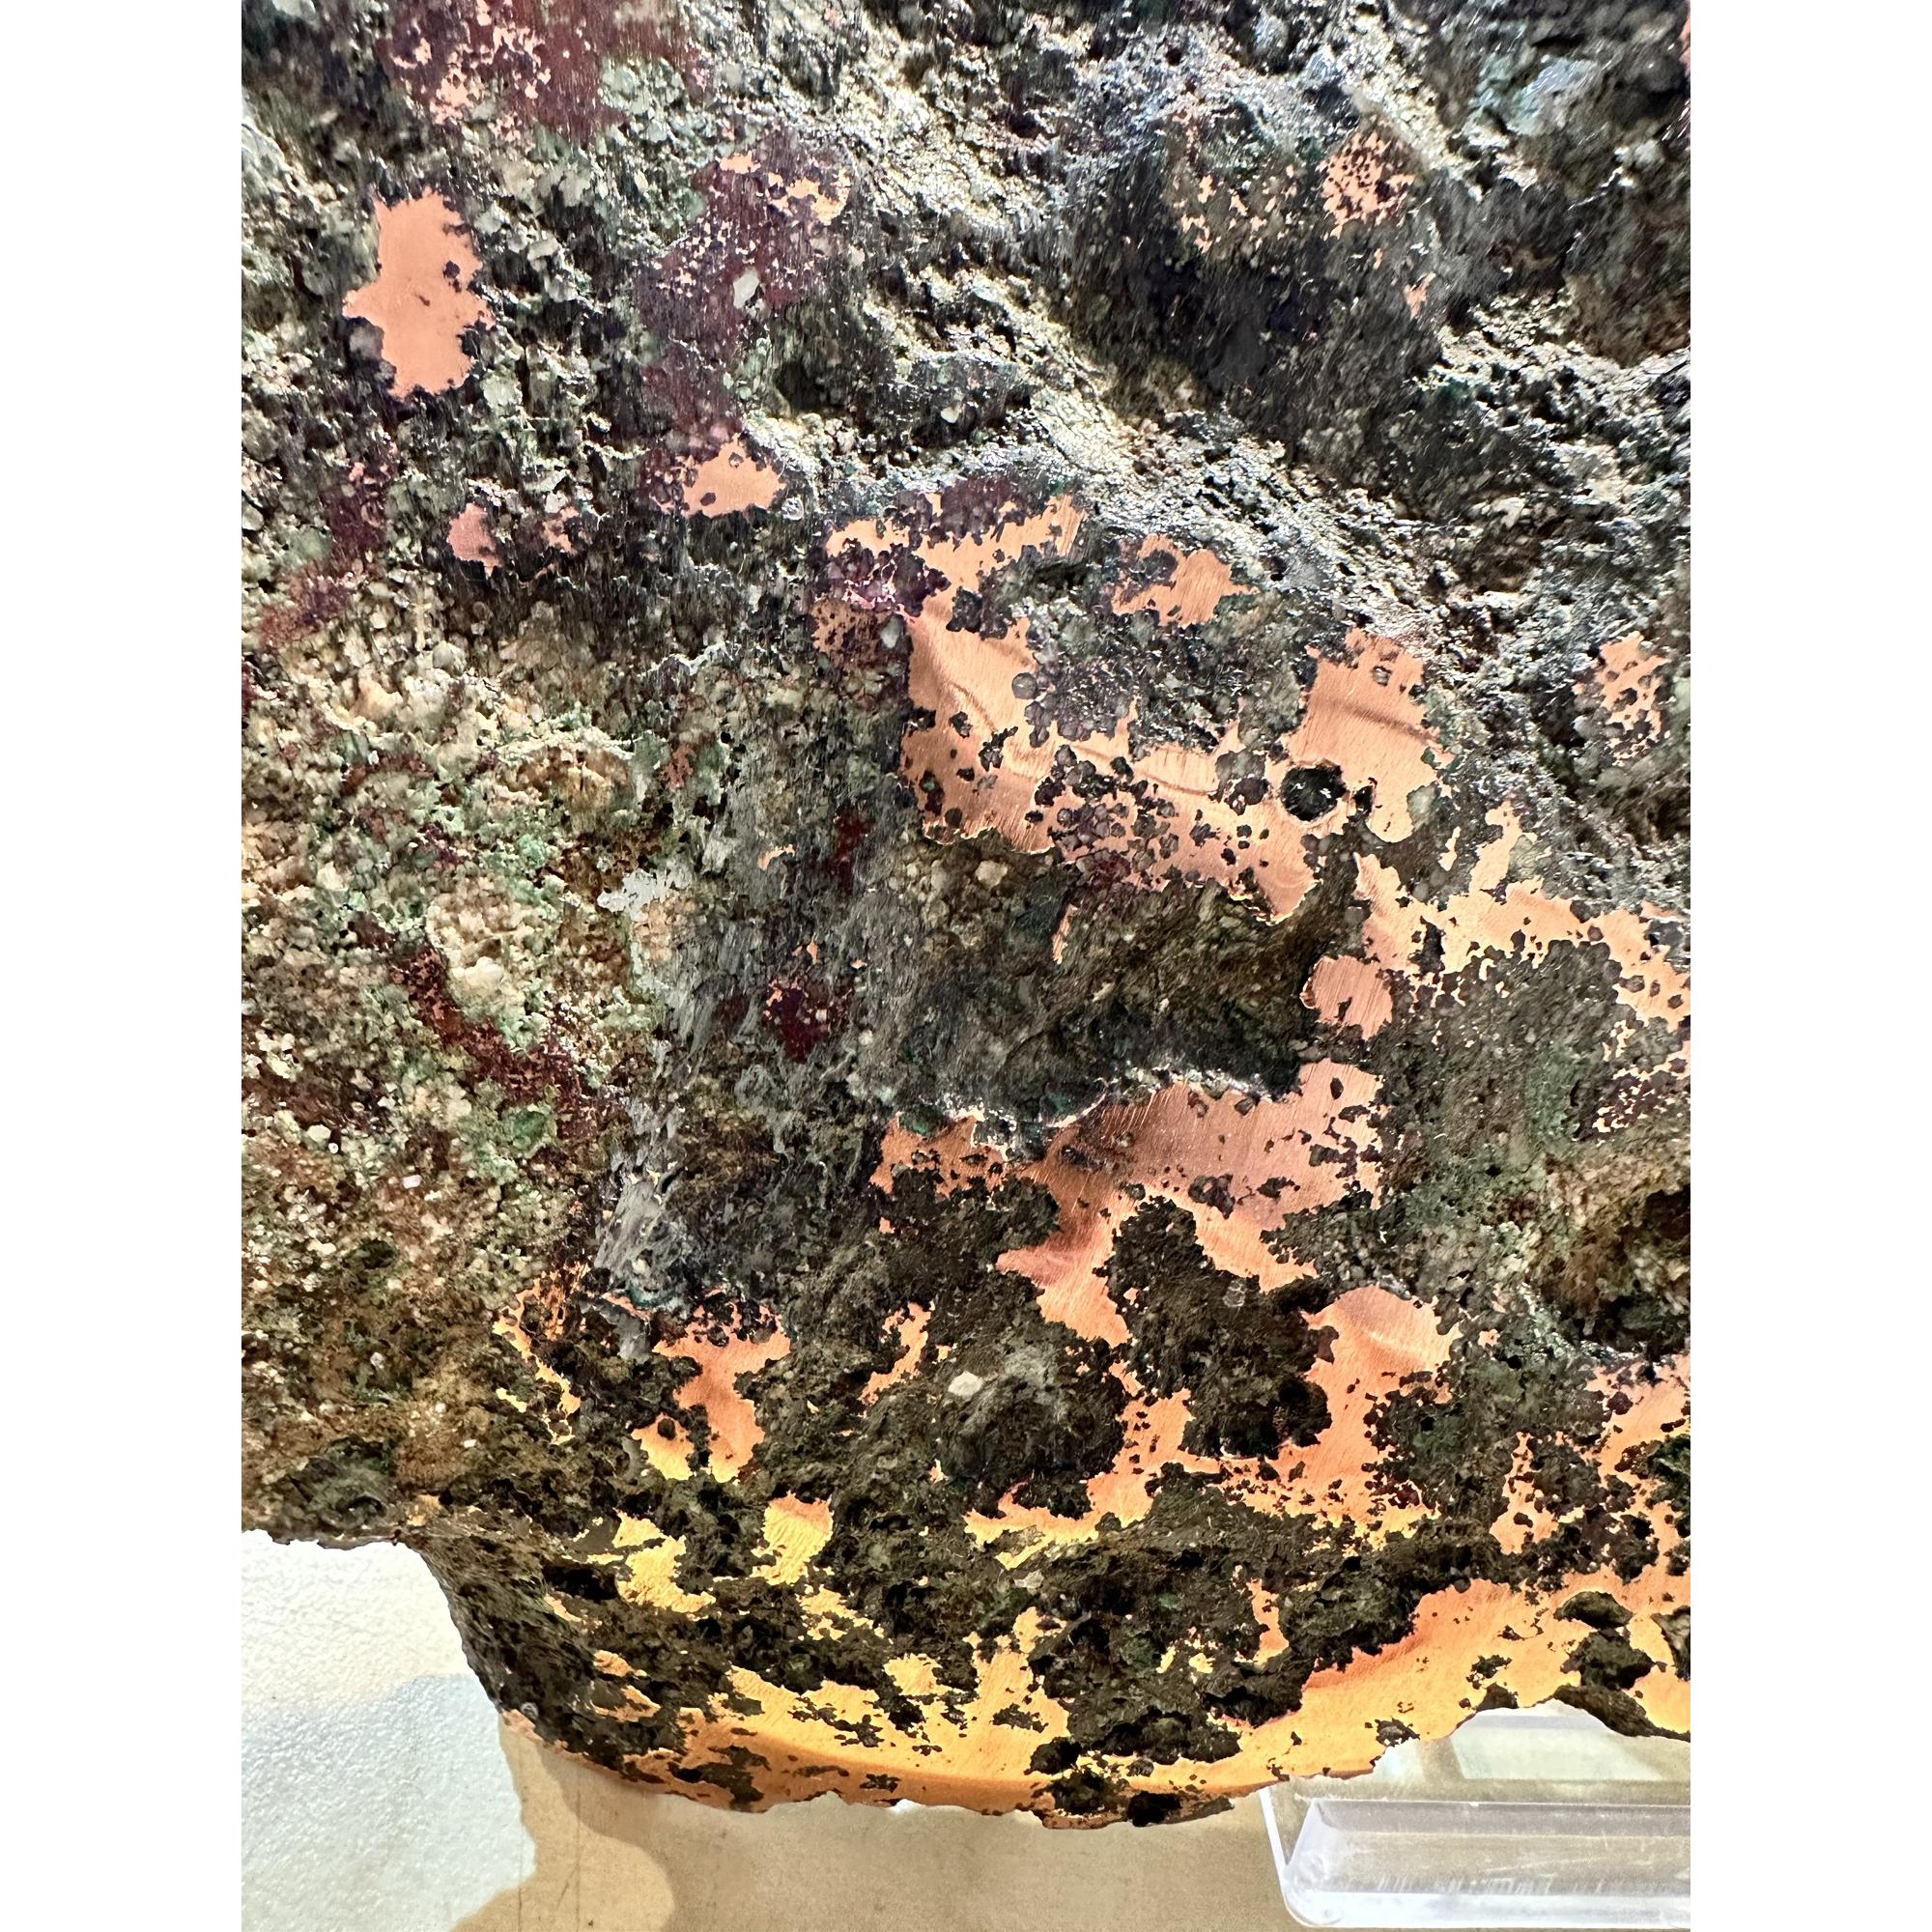 Copper, Glacial Float, Michigan, 10 1/2 inches long Prehistoric Online